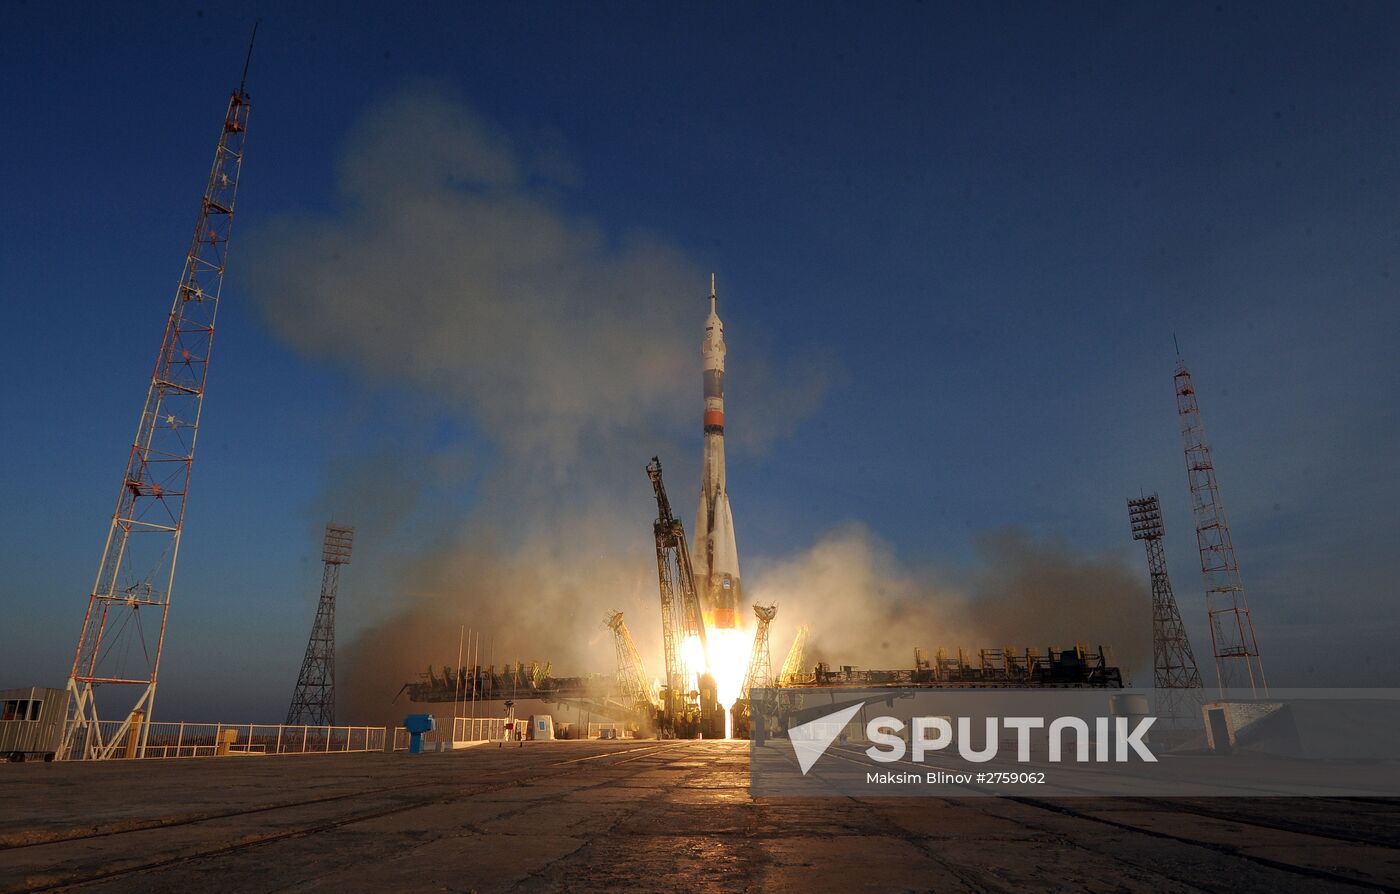 Soyuz TMA-19M spacecraft lifts off from Baikonur Space Center